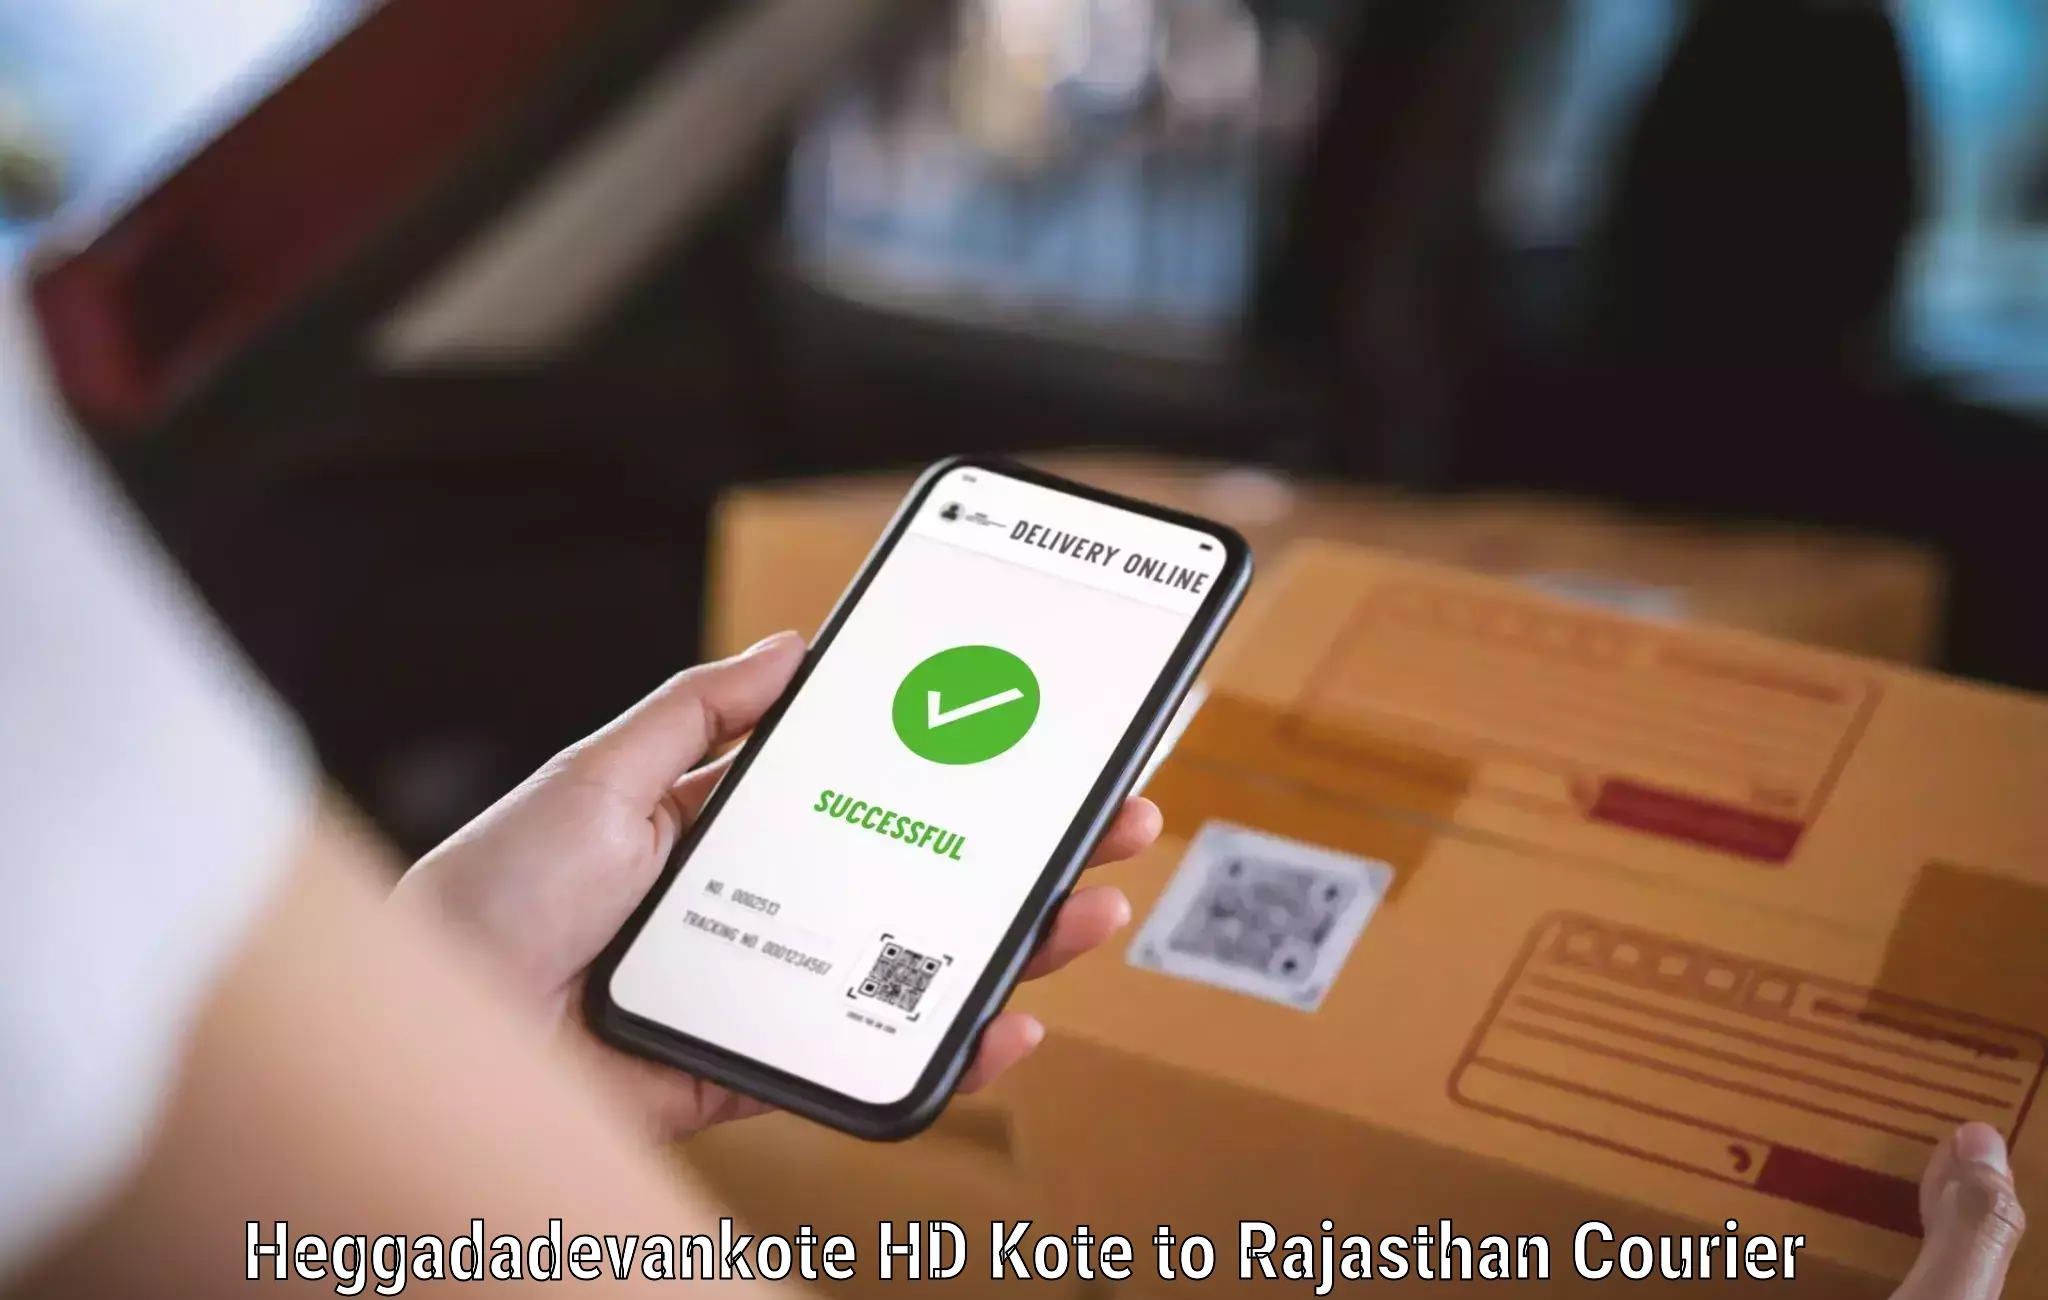 Multi-package shipping Heggadadevankote HD Kote to Balotra